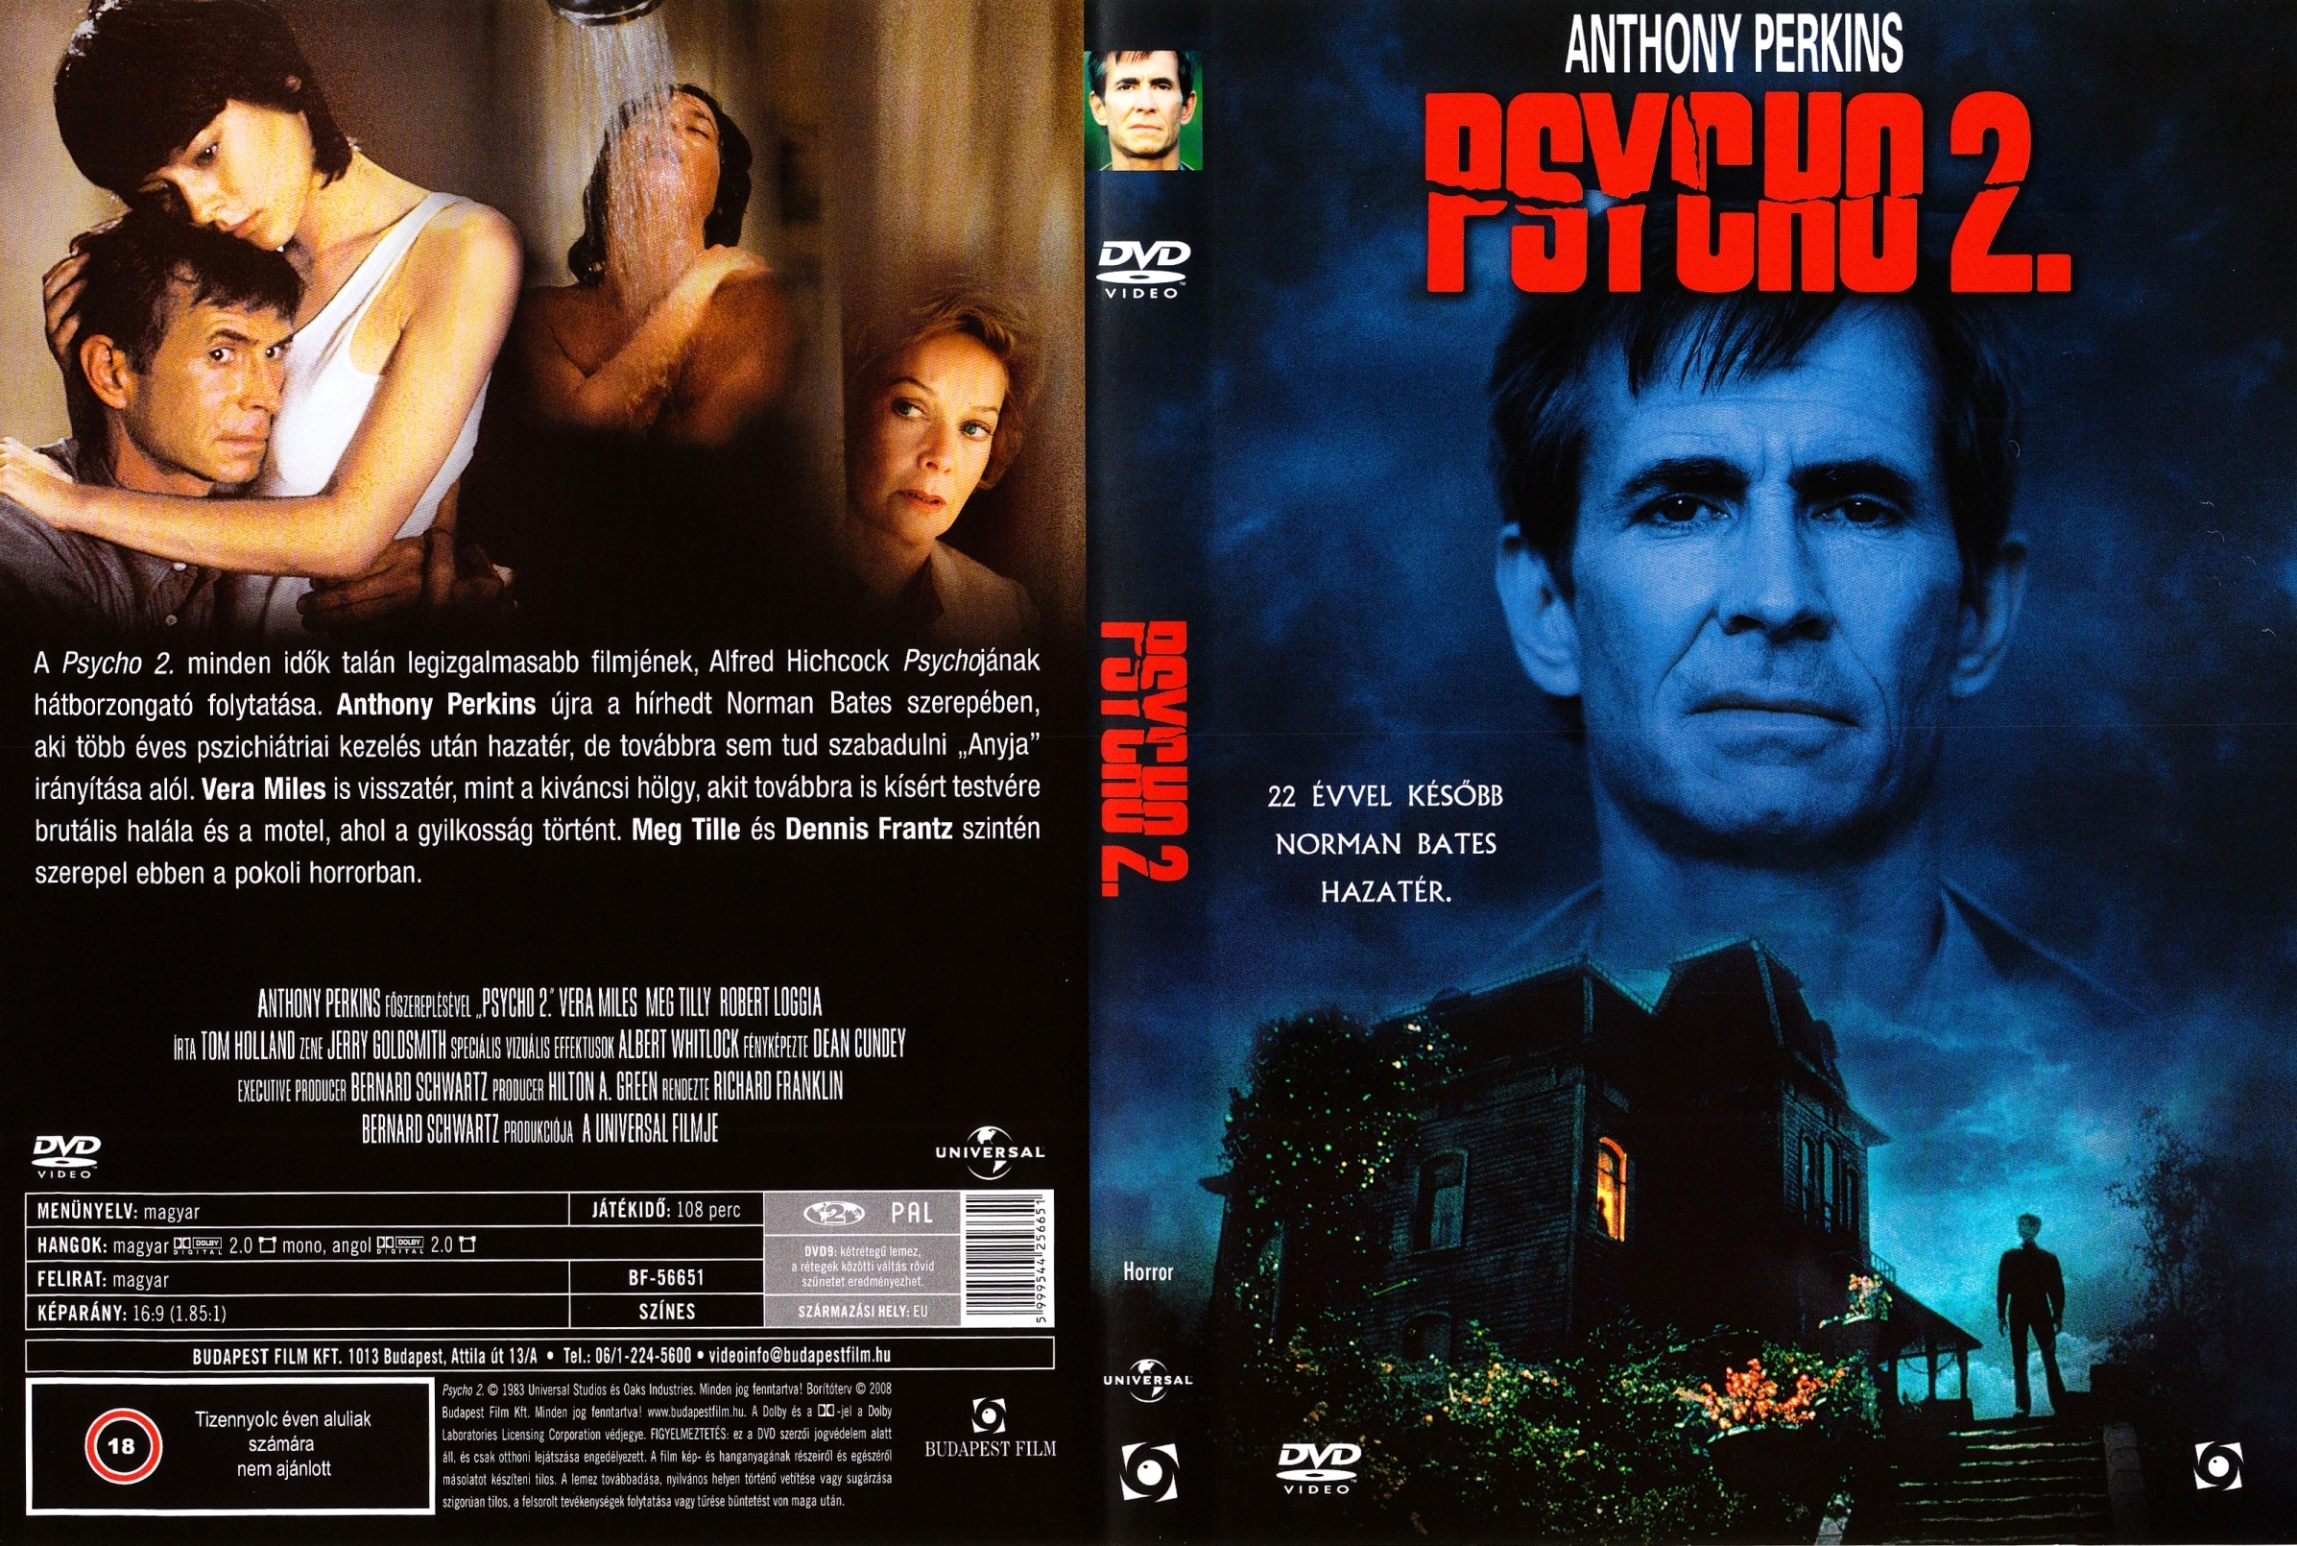 Psycho II (1983) Alfred Hitchcock